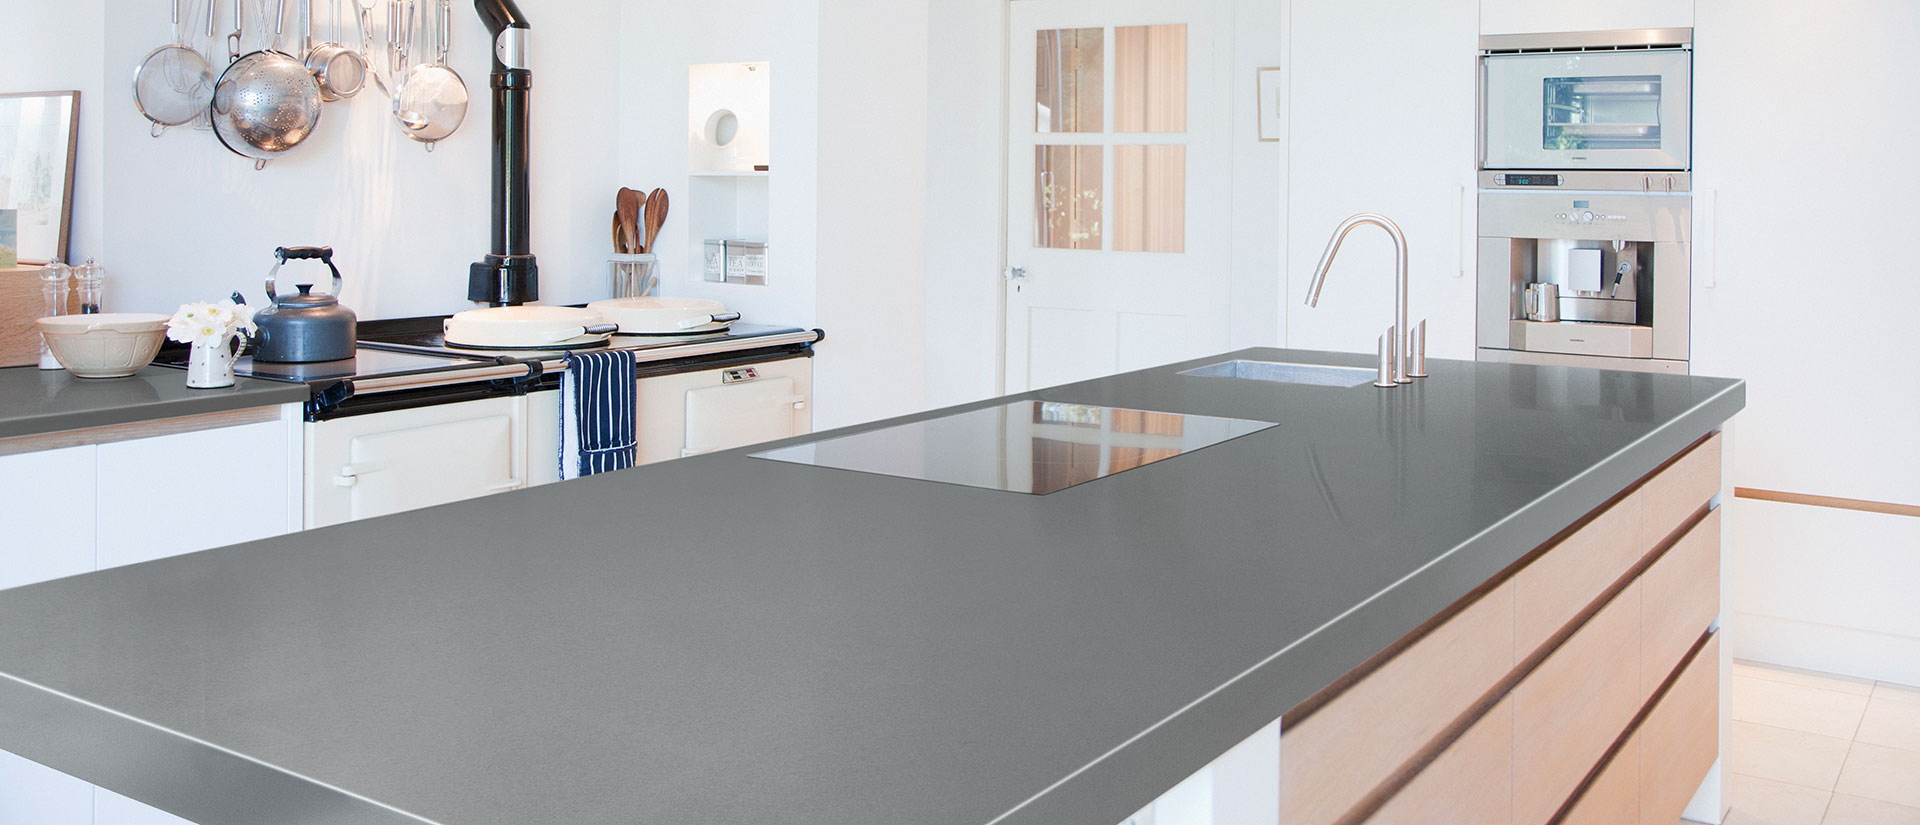 Mirano Gray Quartz countertop in a stylish modern kitchen